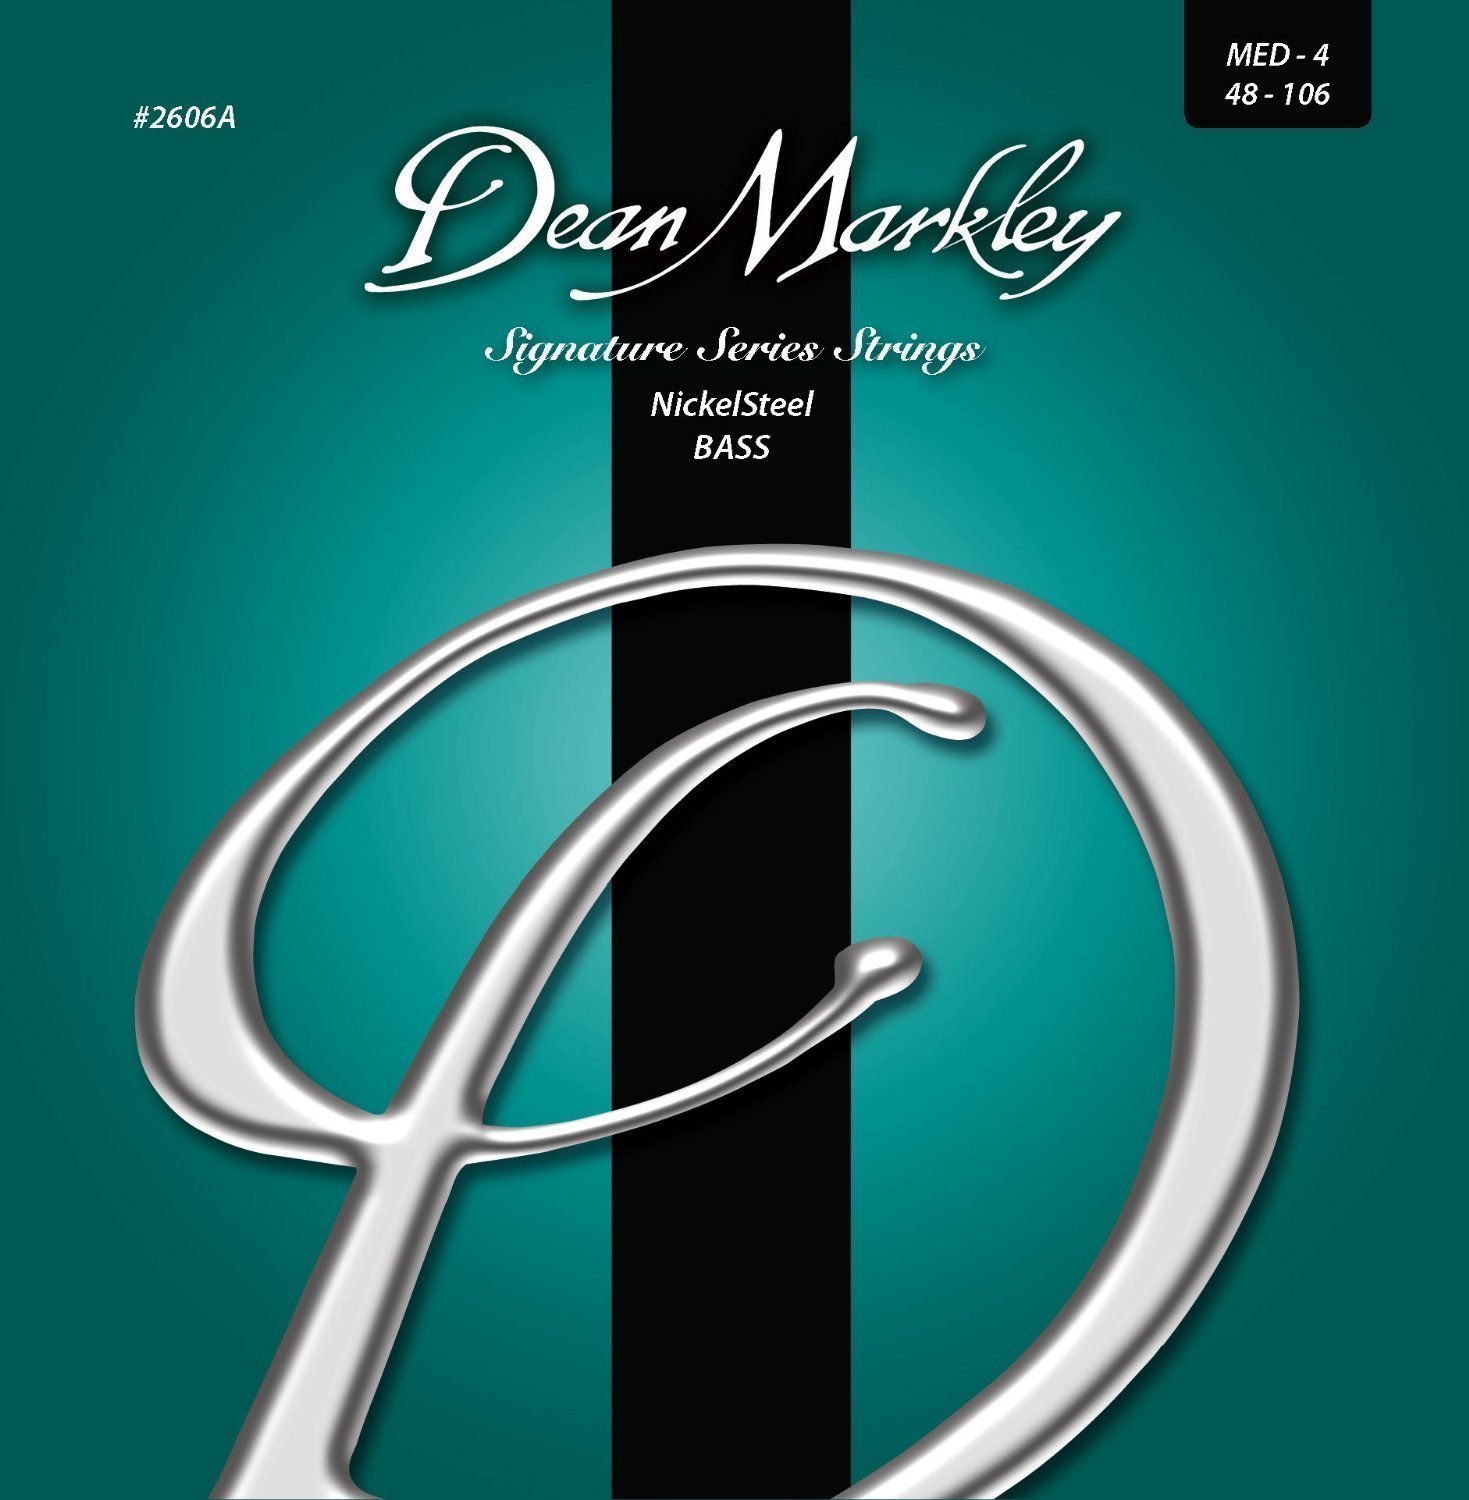 Bassguitar strings Dean Markley 2606A-MED